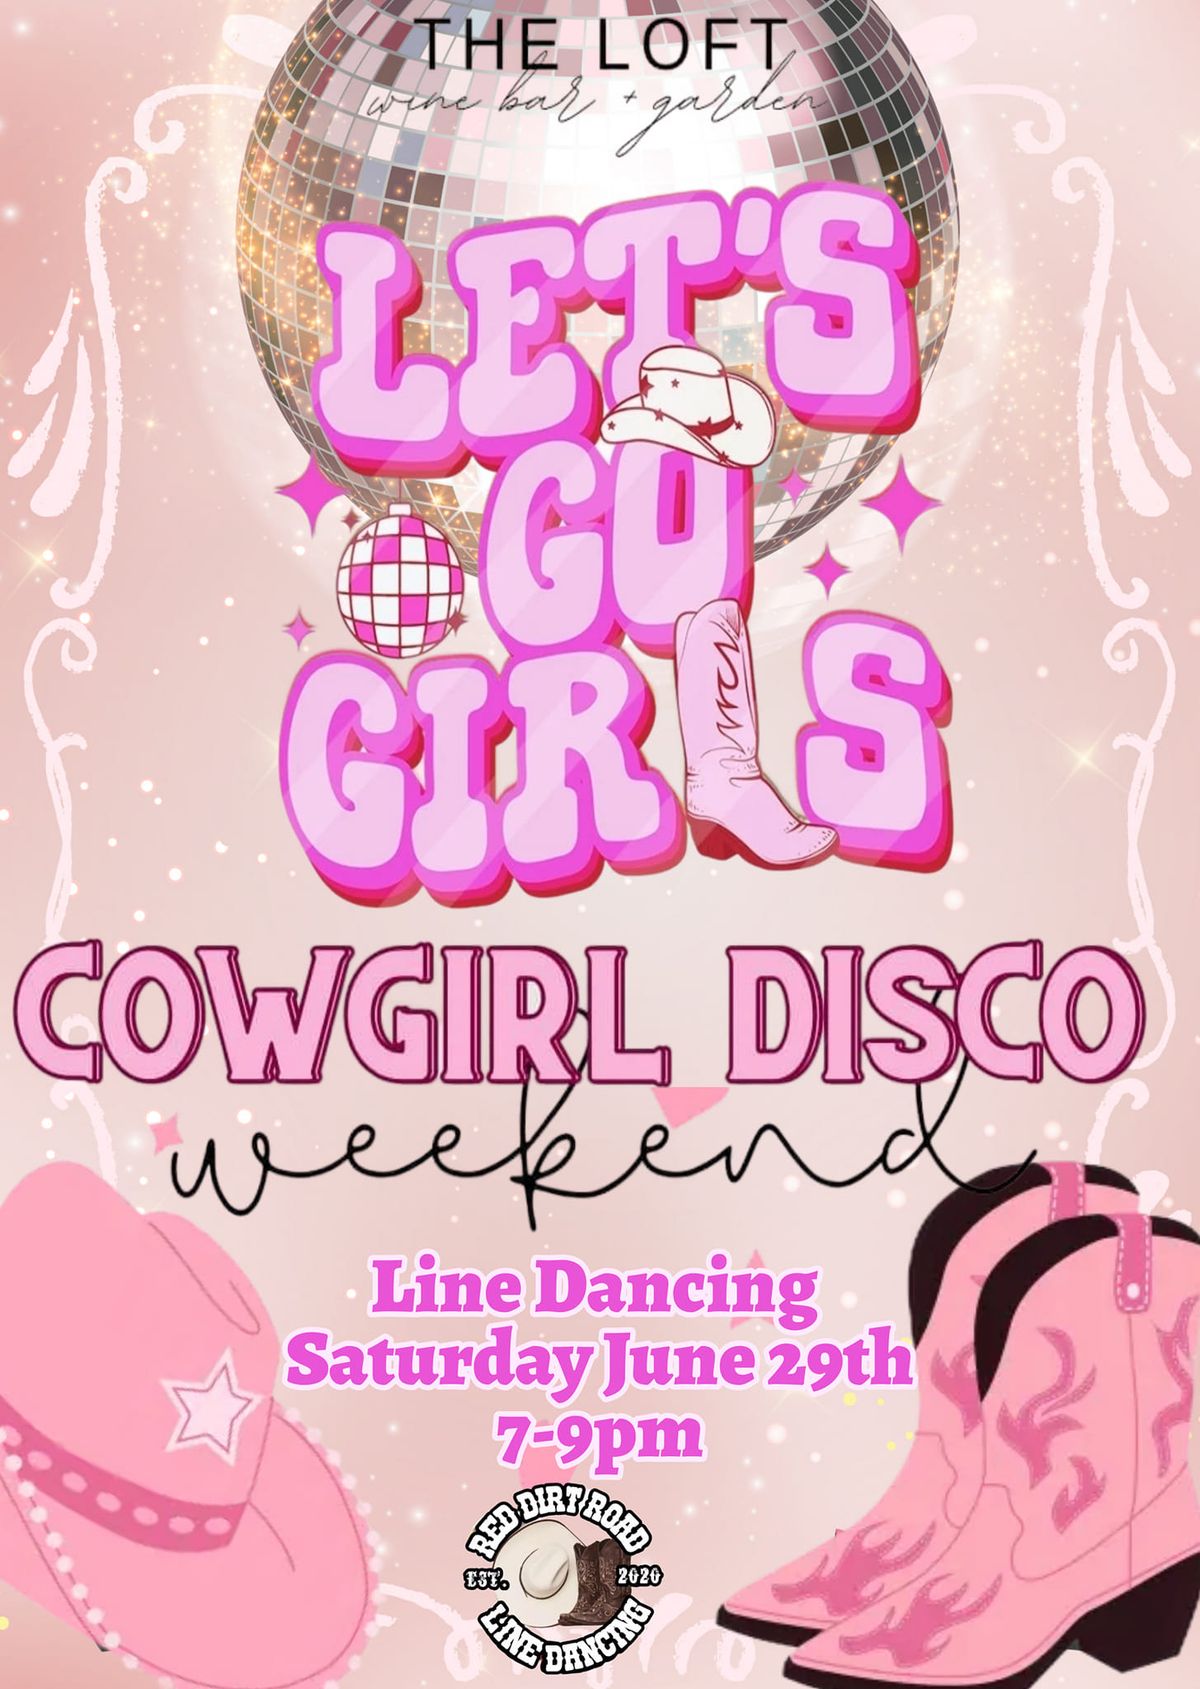 Cowgirl Disco Line Dancing \ud83e\udea9